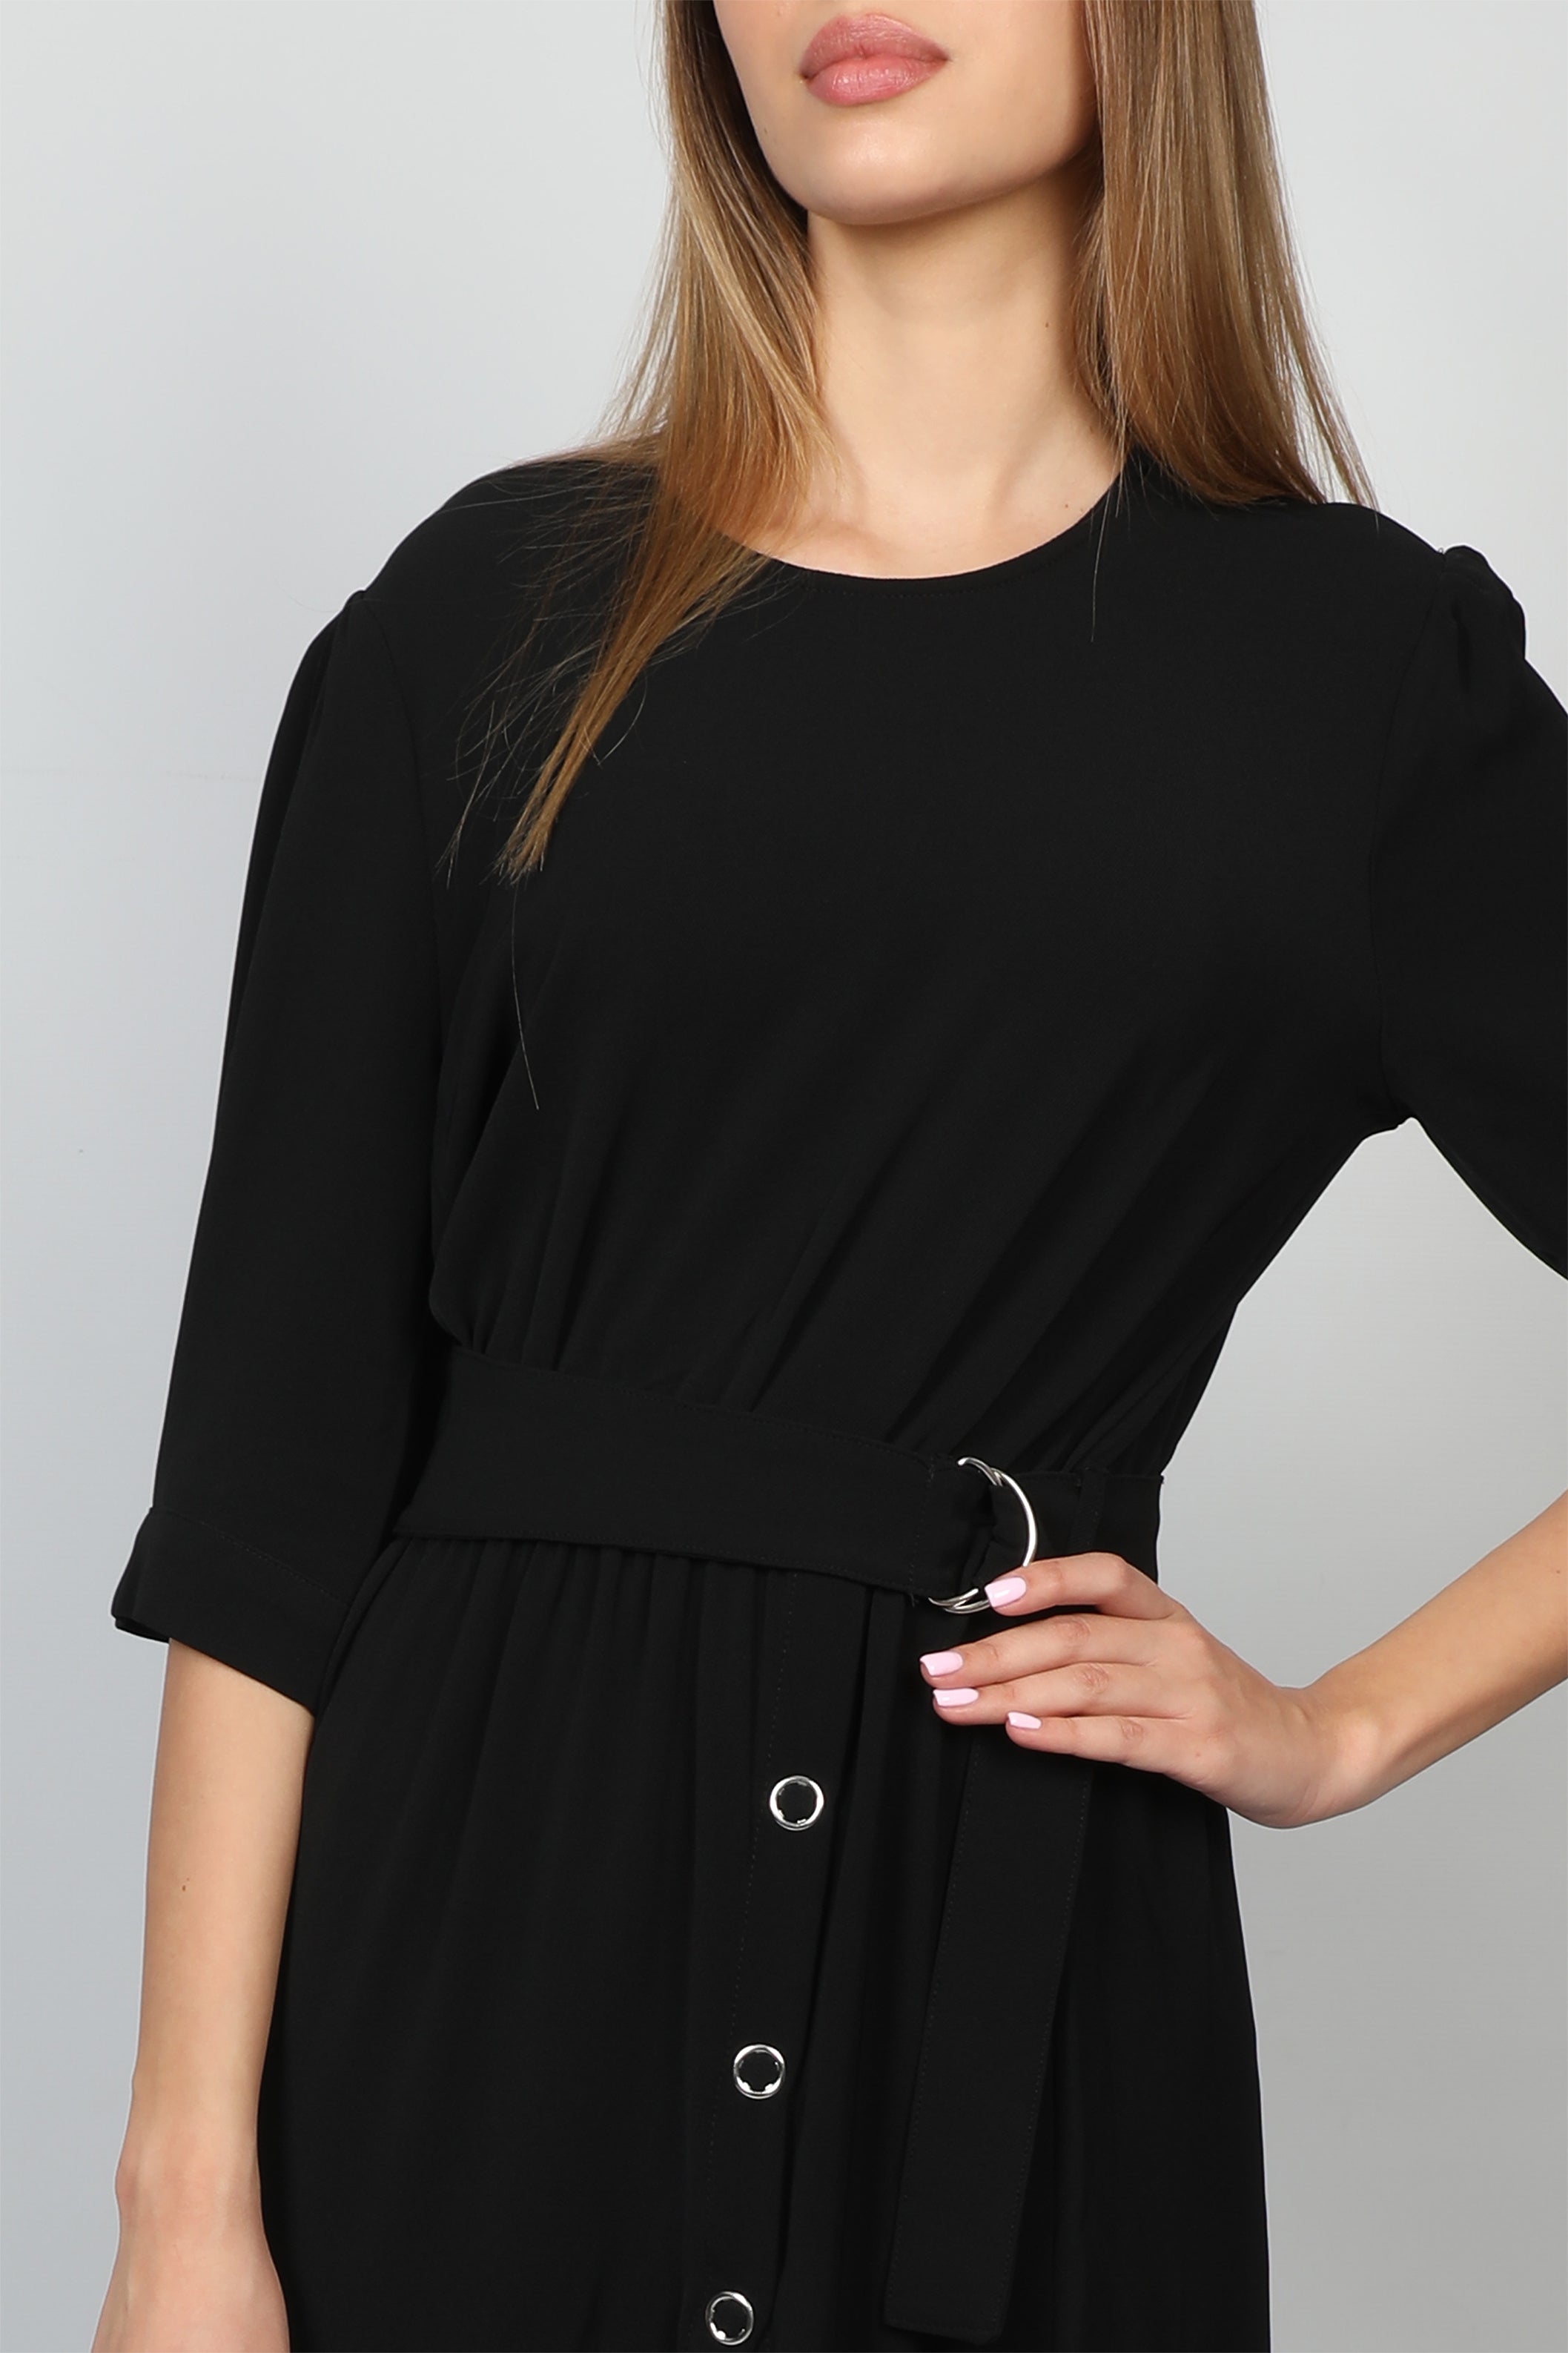 Women Casual Black Dress Skirt Buttoned Style